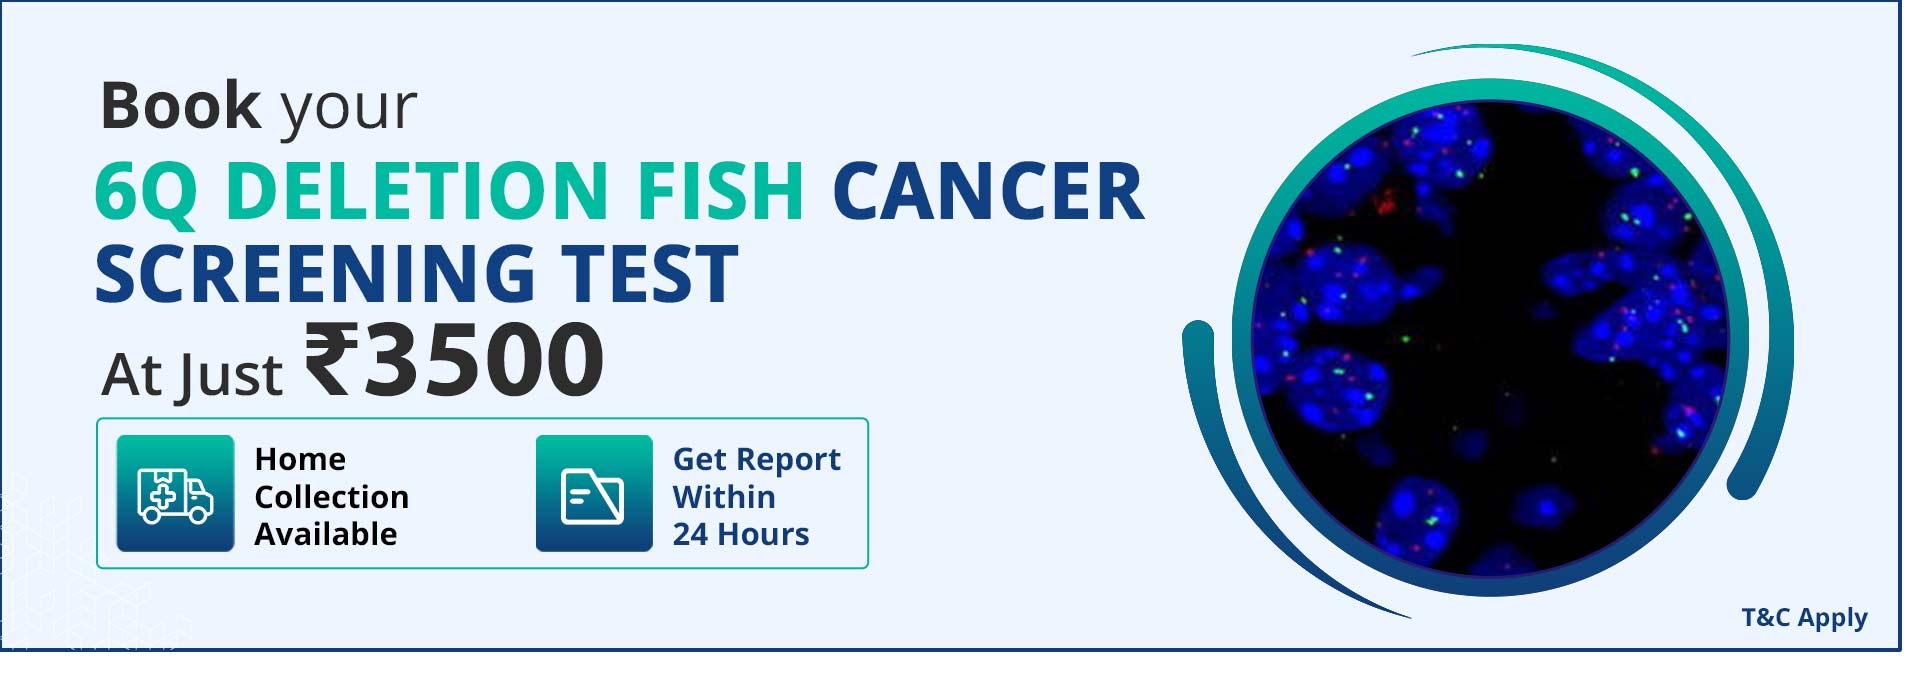 6q Deletion Fish Cancer Screening Test